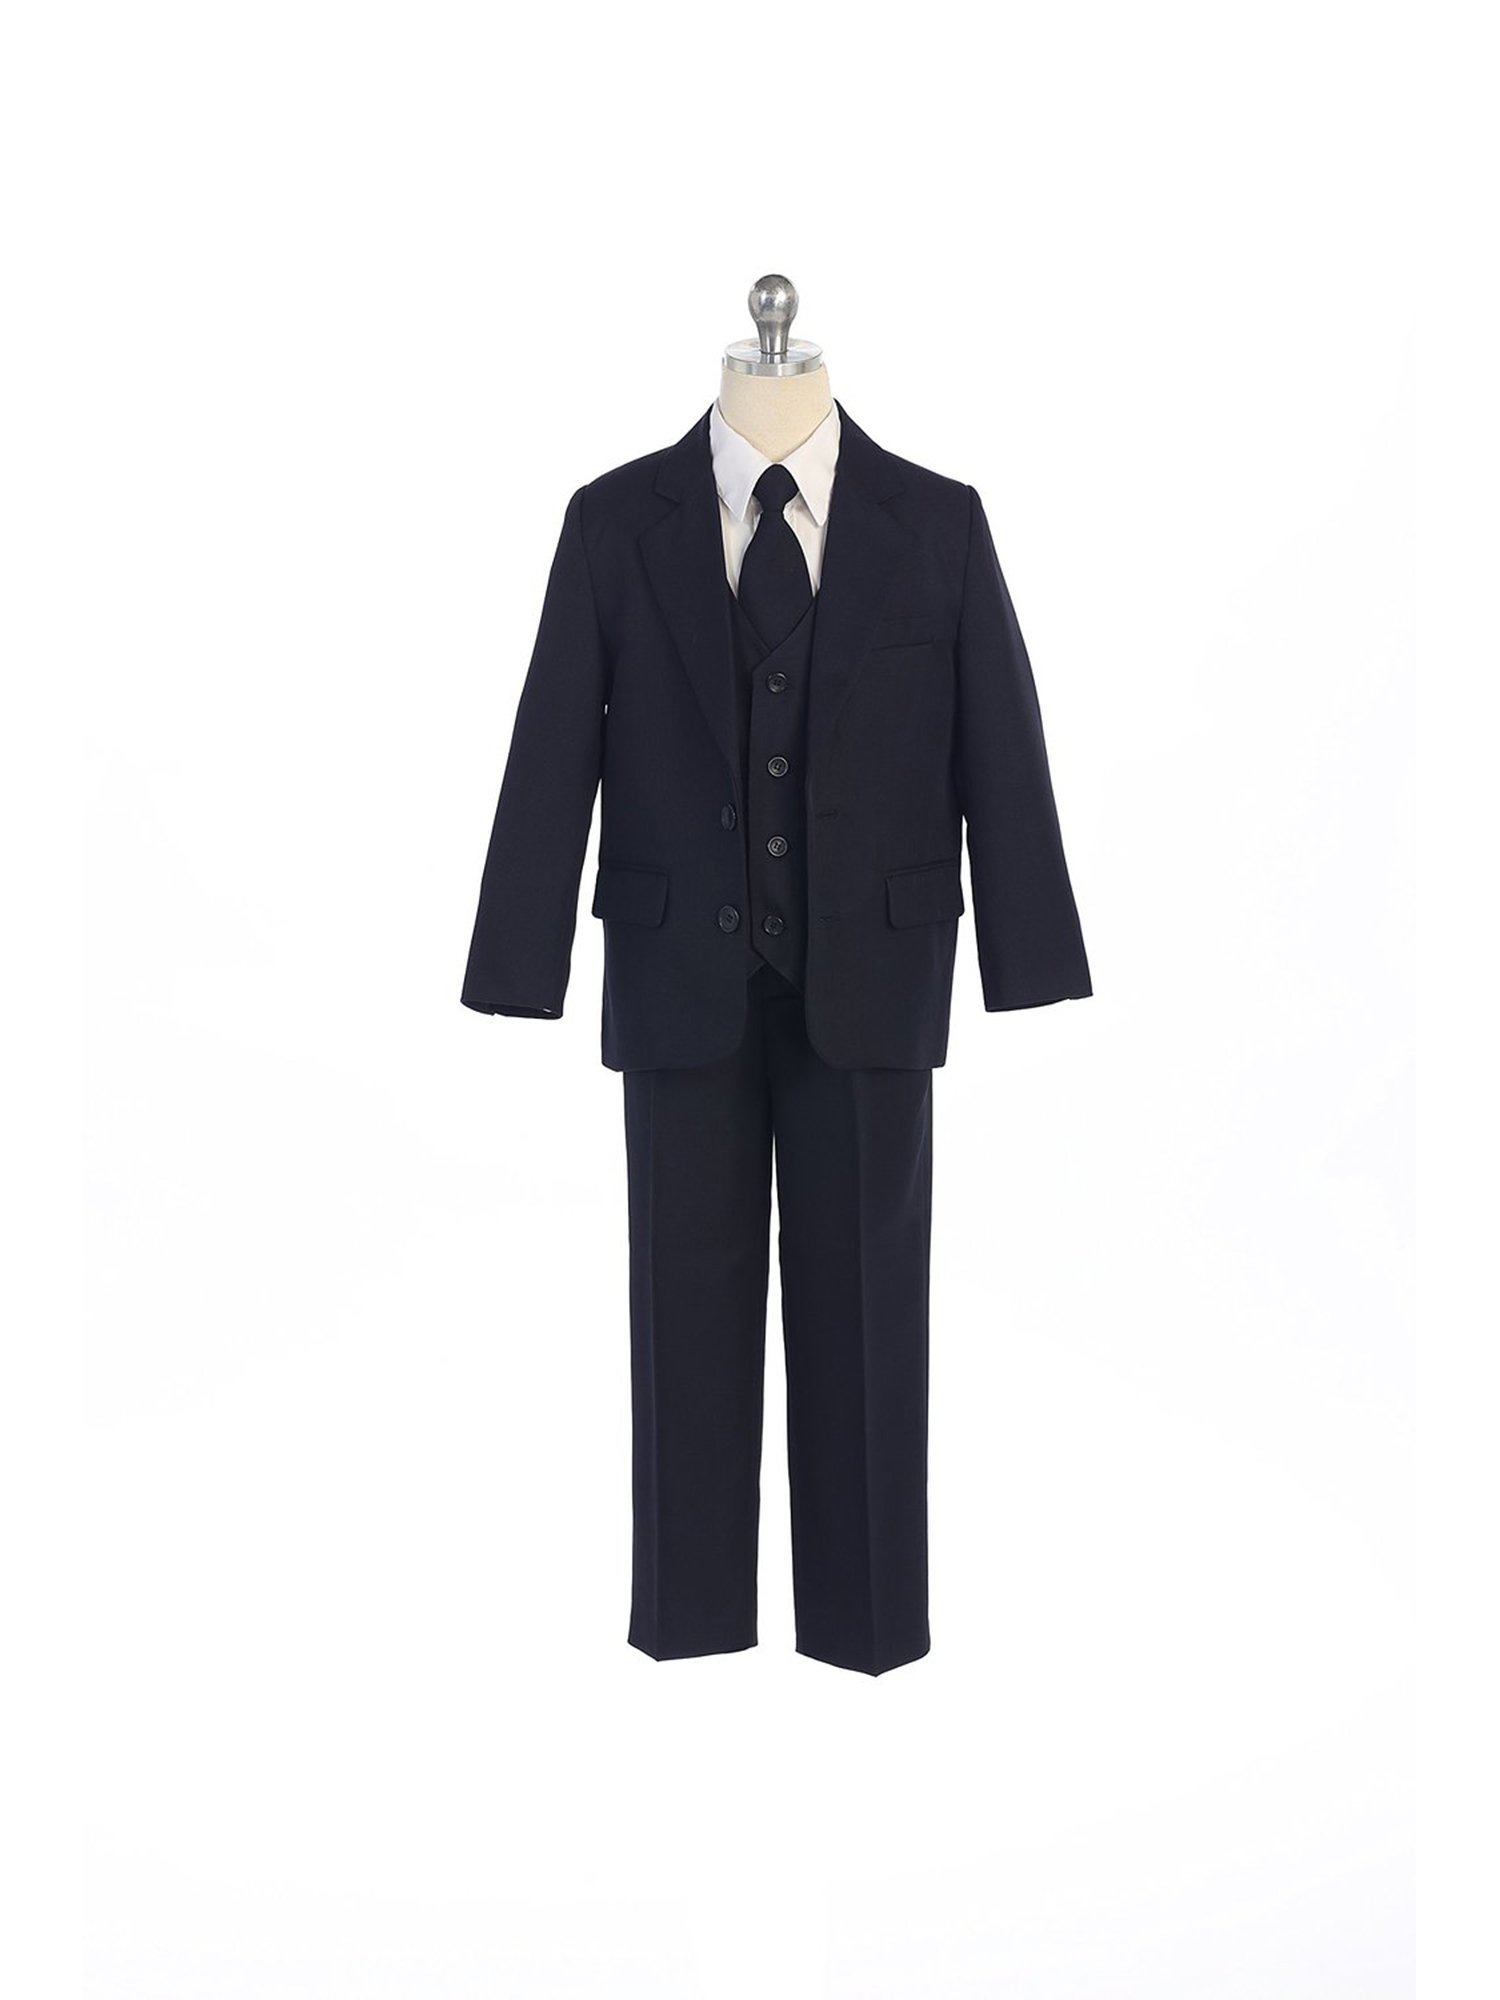 COLE Boys Suit with Shirt and Vest (5-Piece) - (18 Husky, Navy Blue)